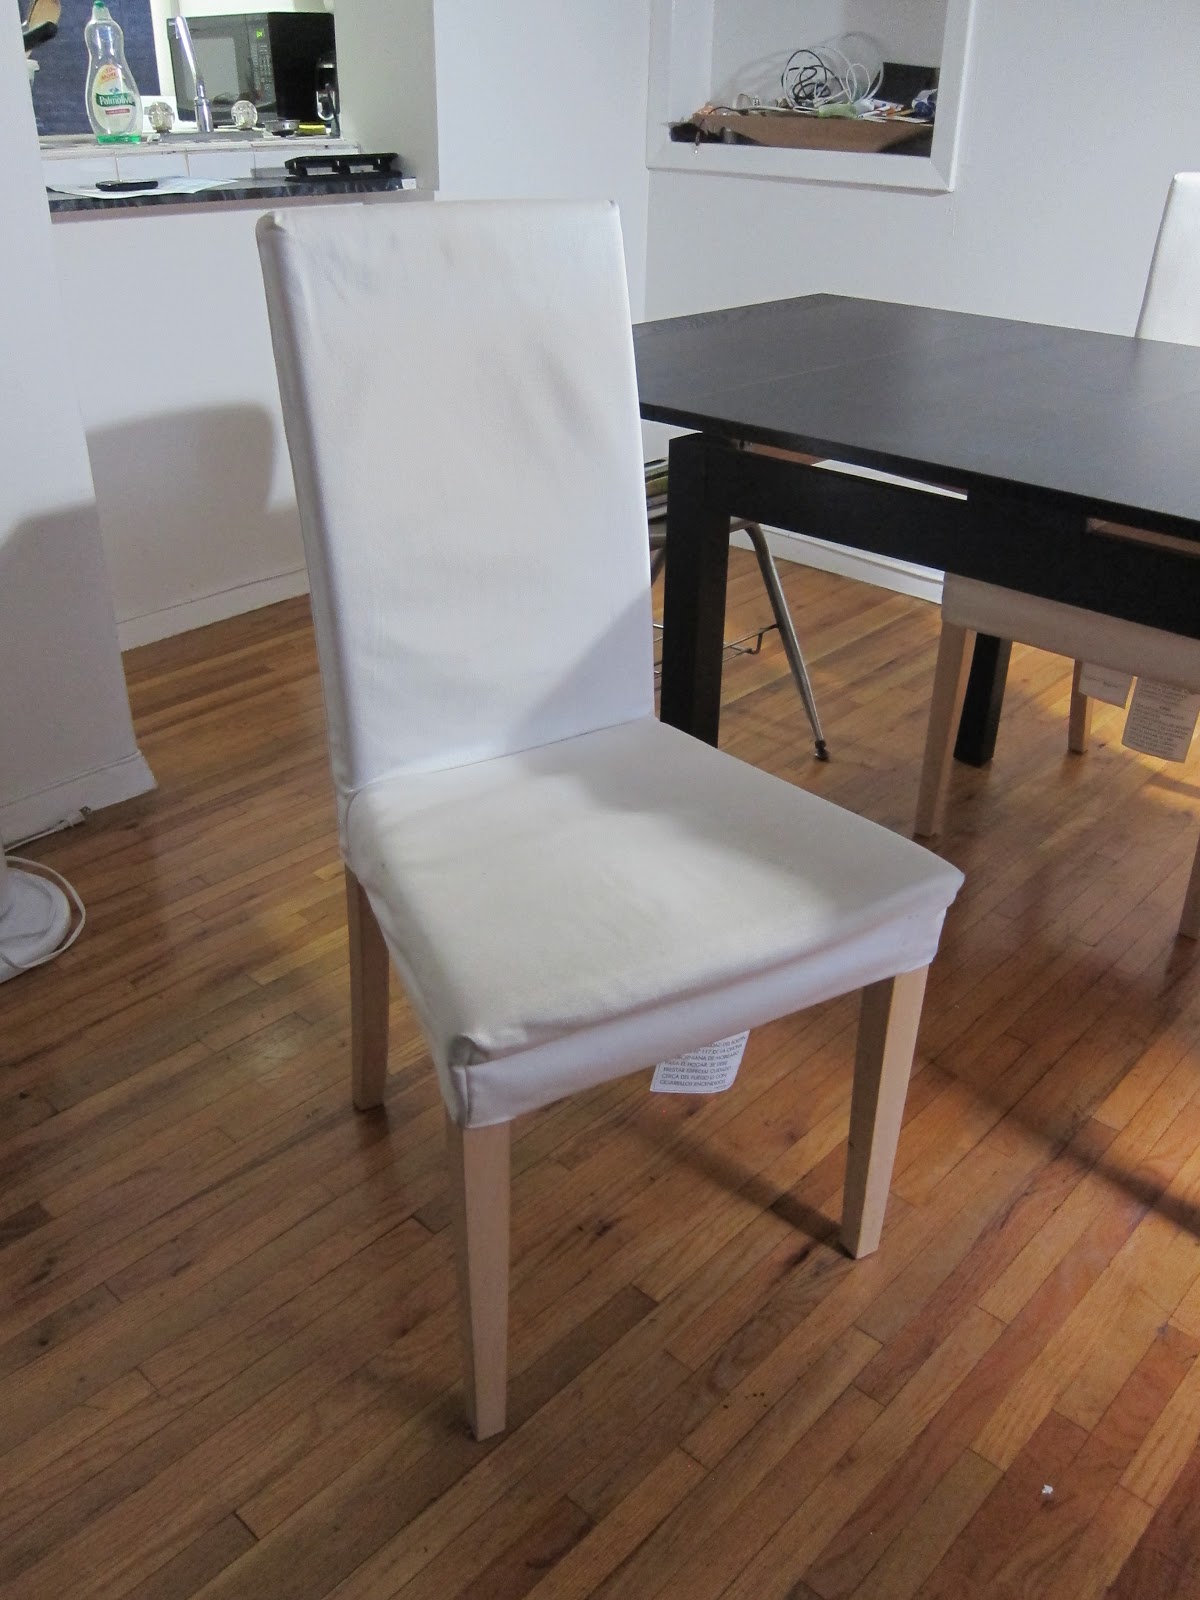 My Apartment Stuff: 2 IKEA HARRY Chairs, birch, white - $30 each -